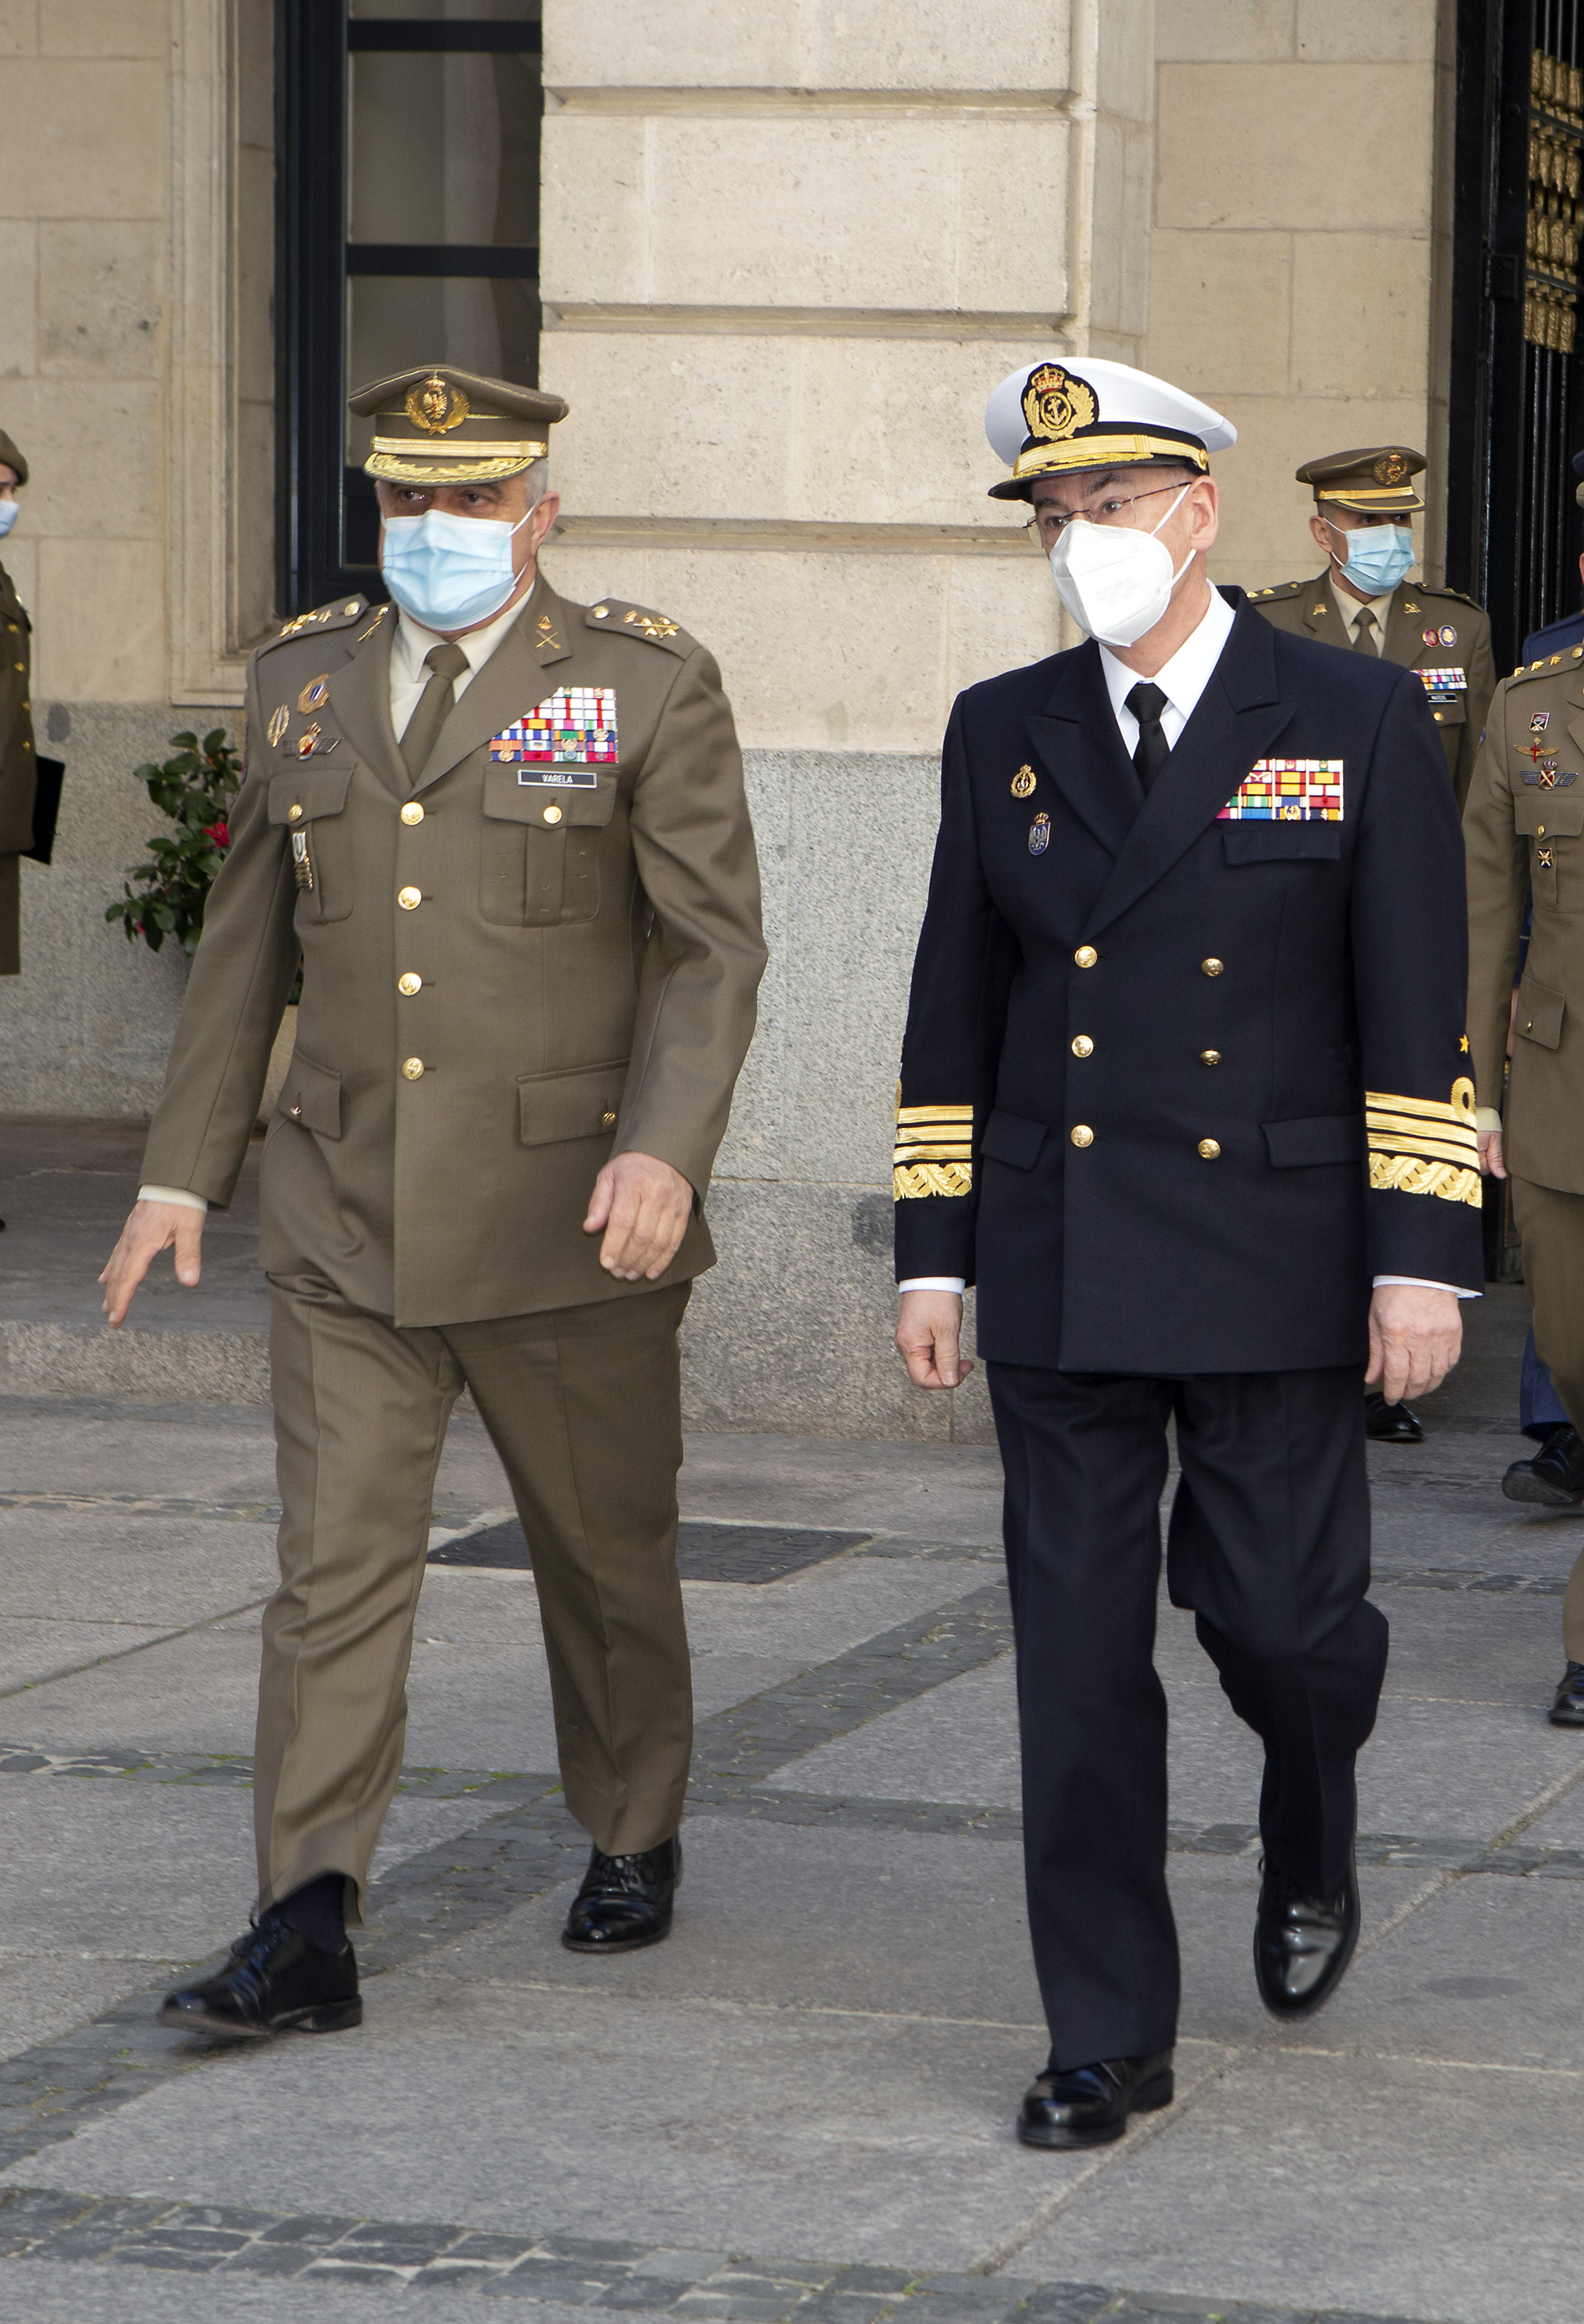 CHOD accompanied by Army Chief of Staff